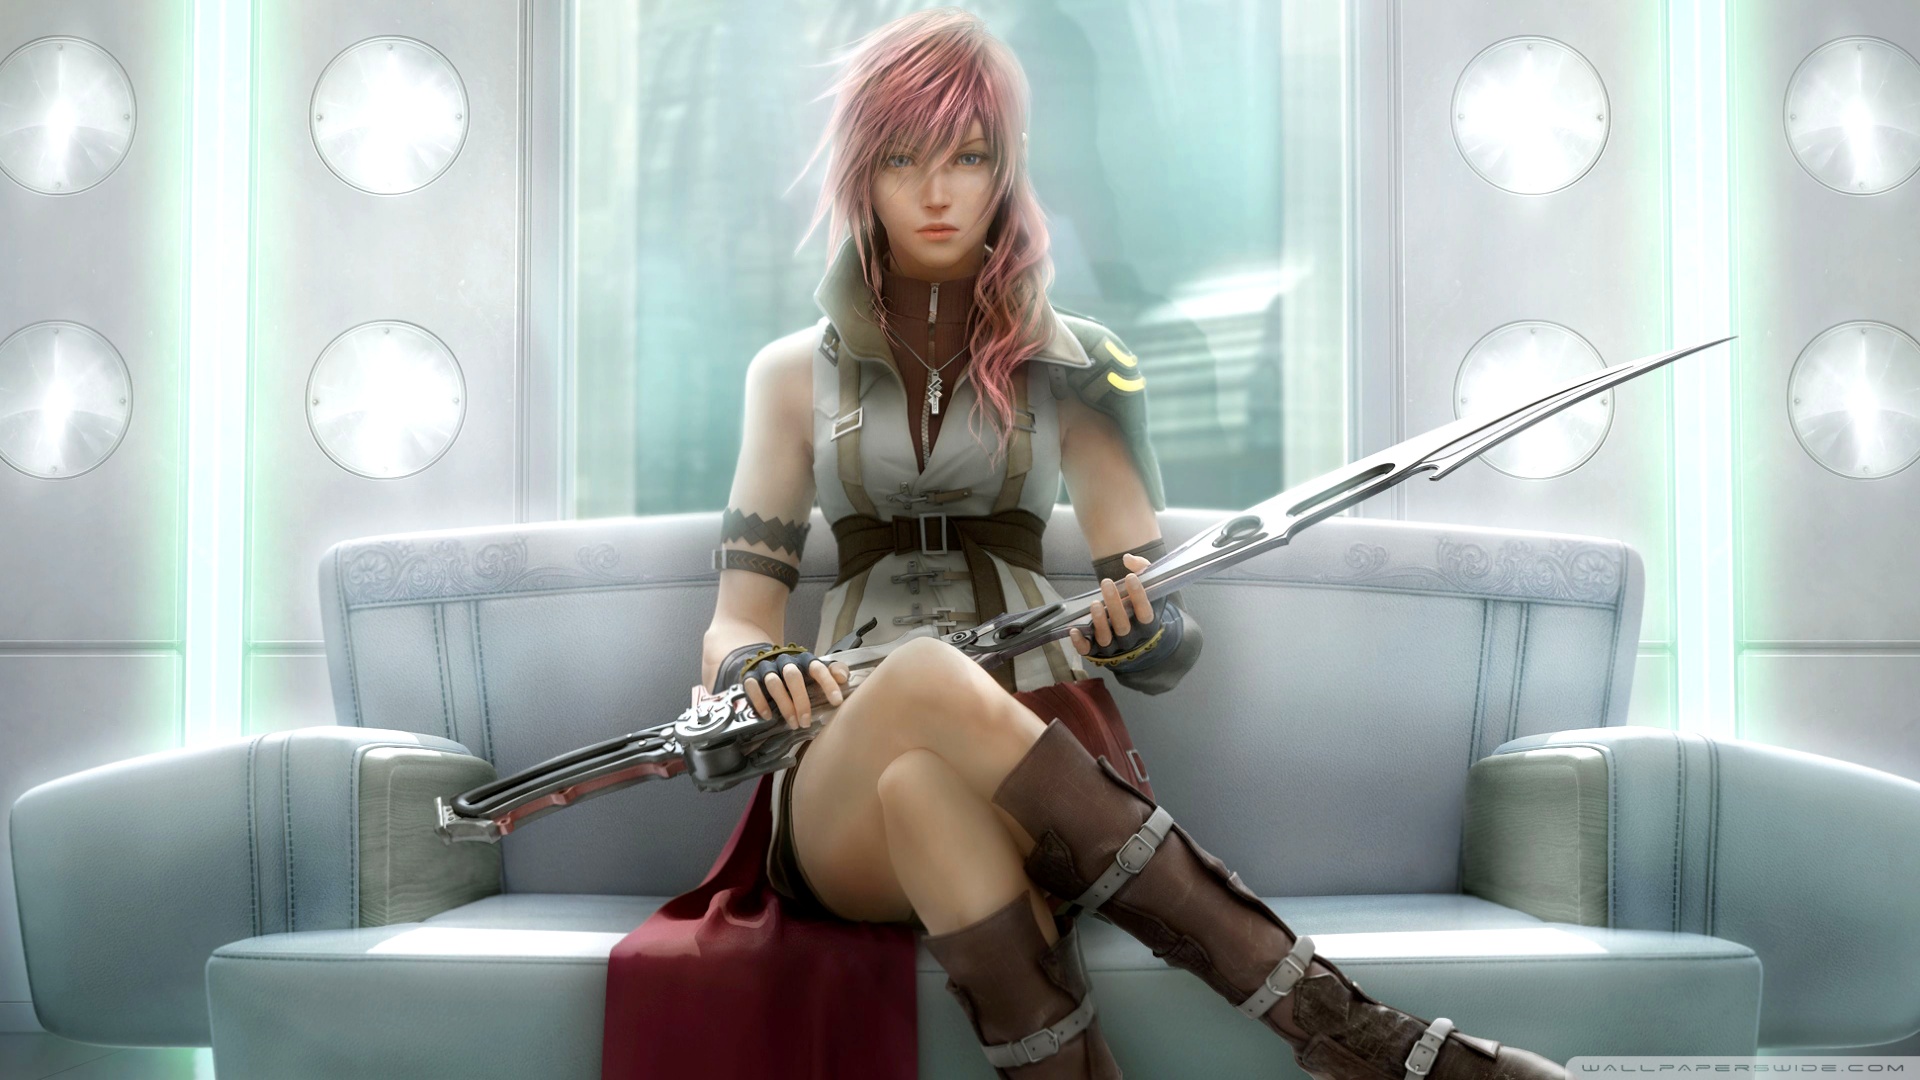 Descarga gratuita de fondo de pantalla para móvil de Videojuego, Rayo (Final Fantasy), Fainaru Fantajî Xiii.